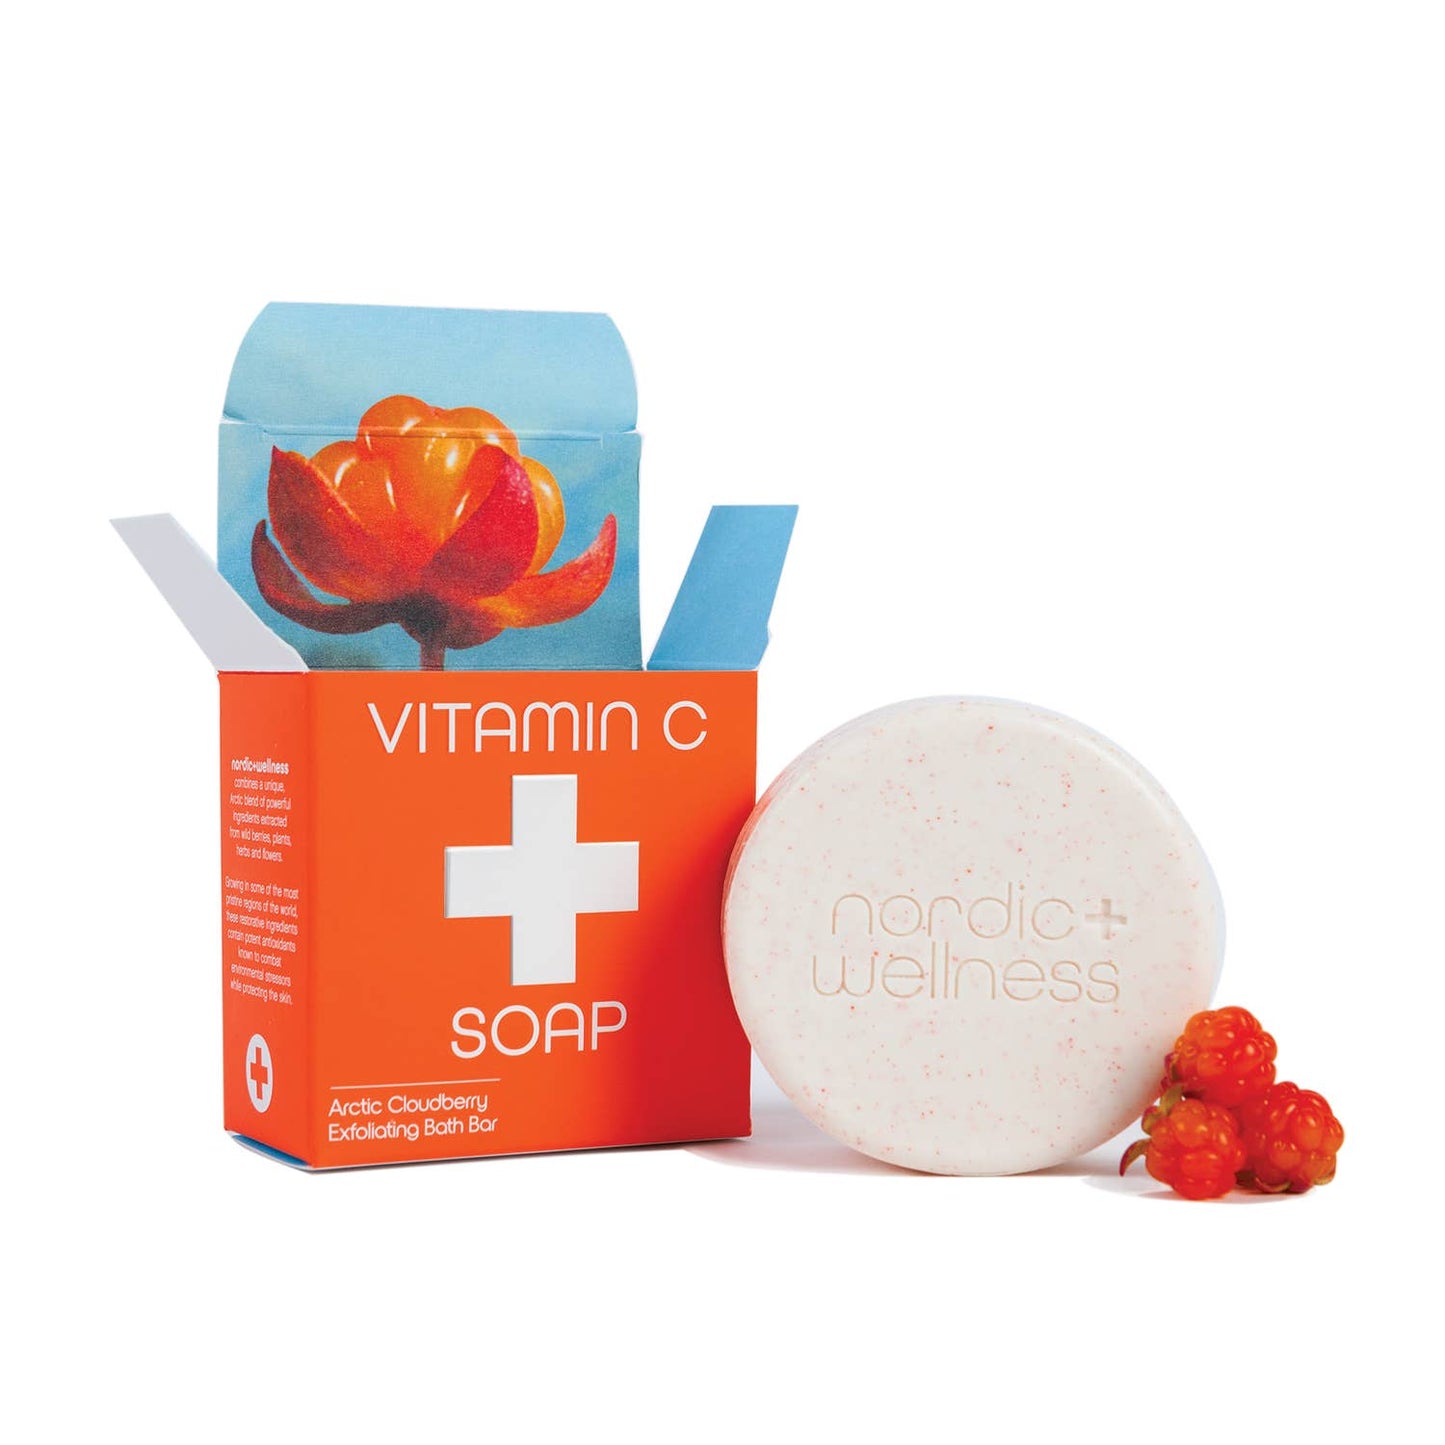 Nordic+Wellness™ Vitamin C Bar Soap